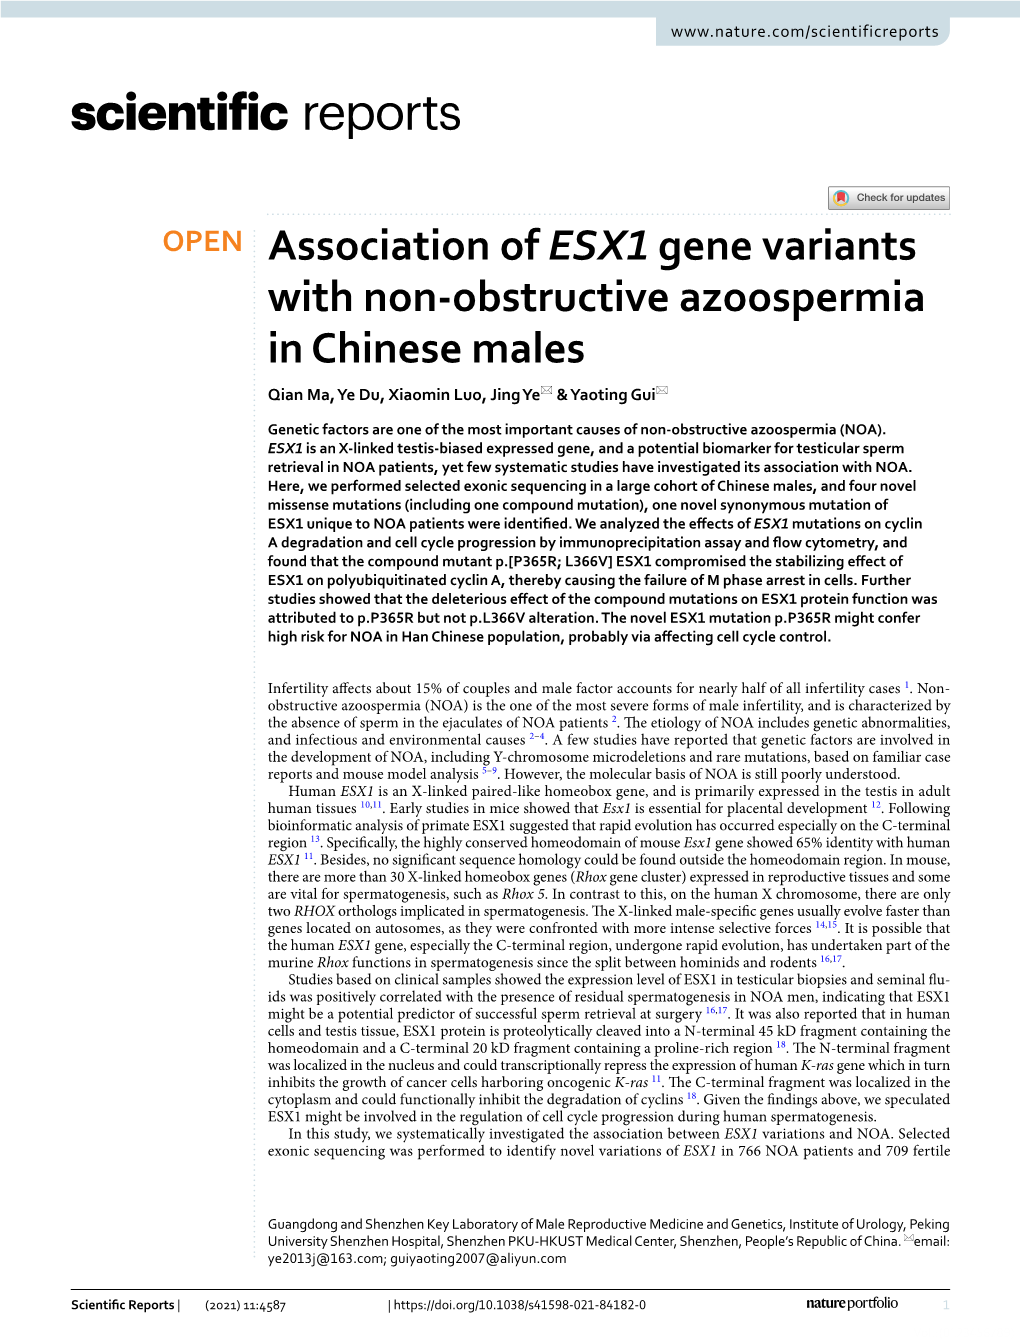 Association of ESX1 Gene Variants with Non-Obstructive Azoospermia